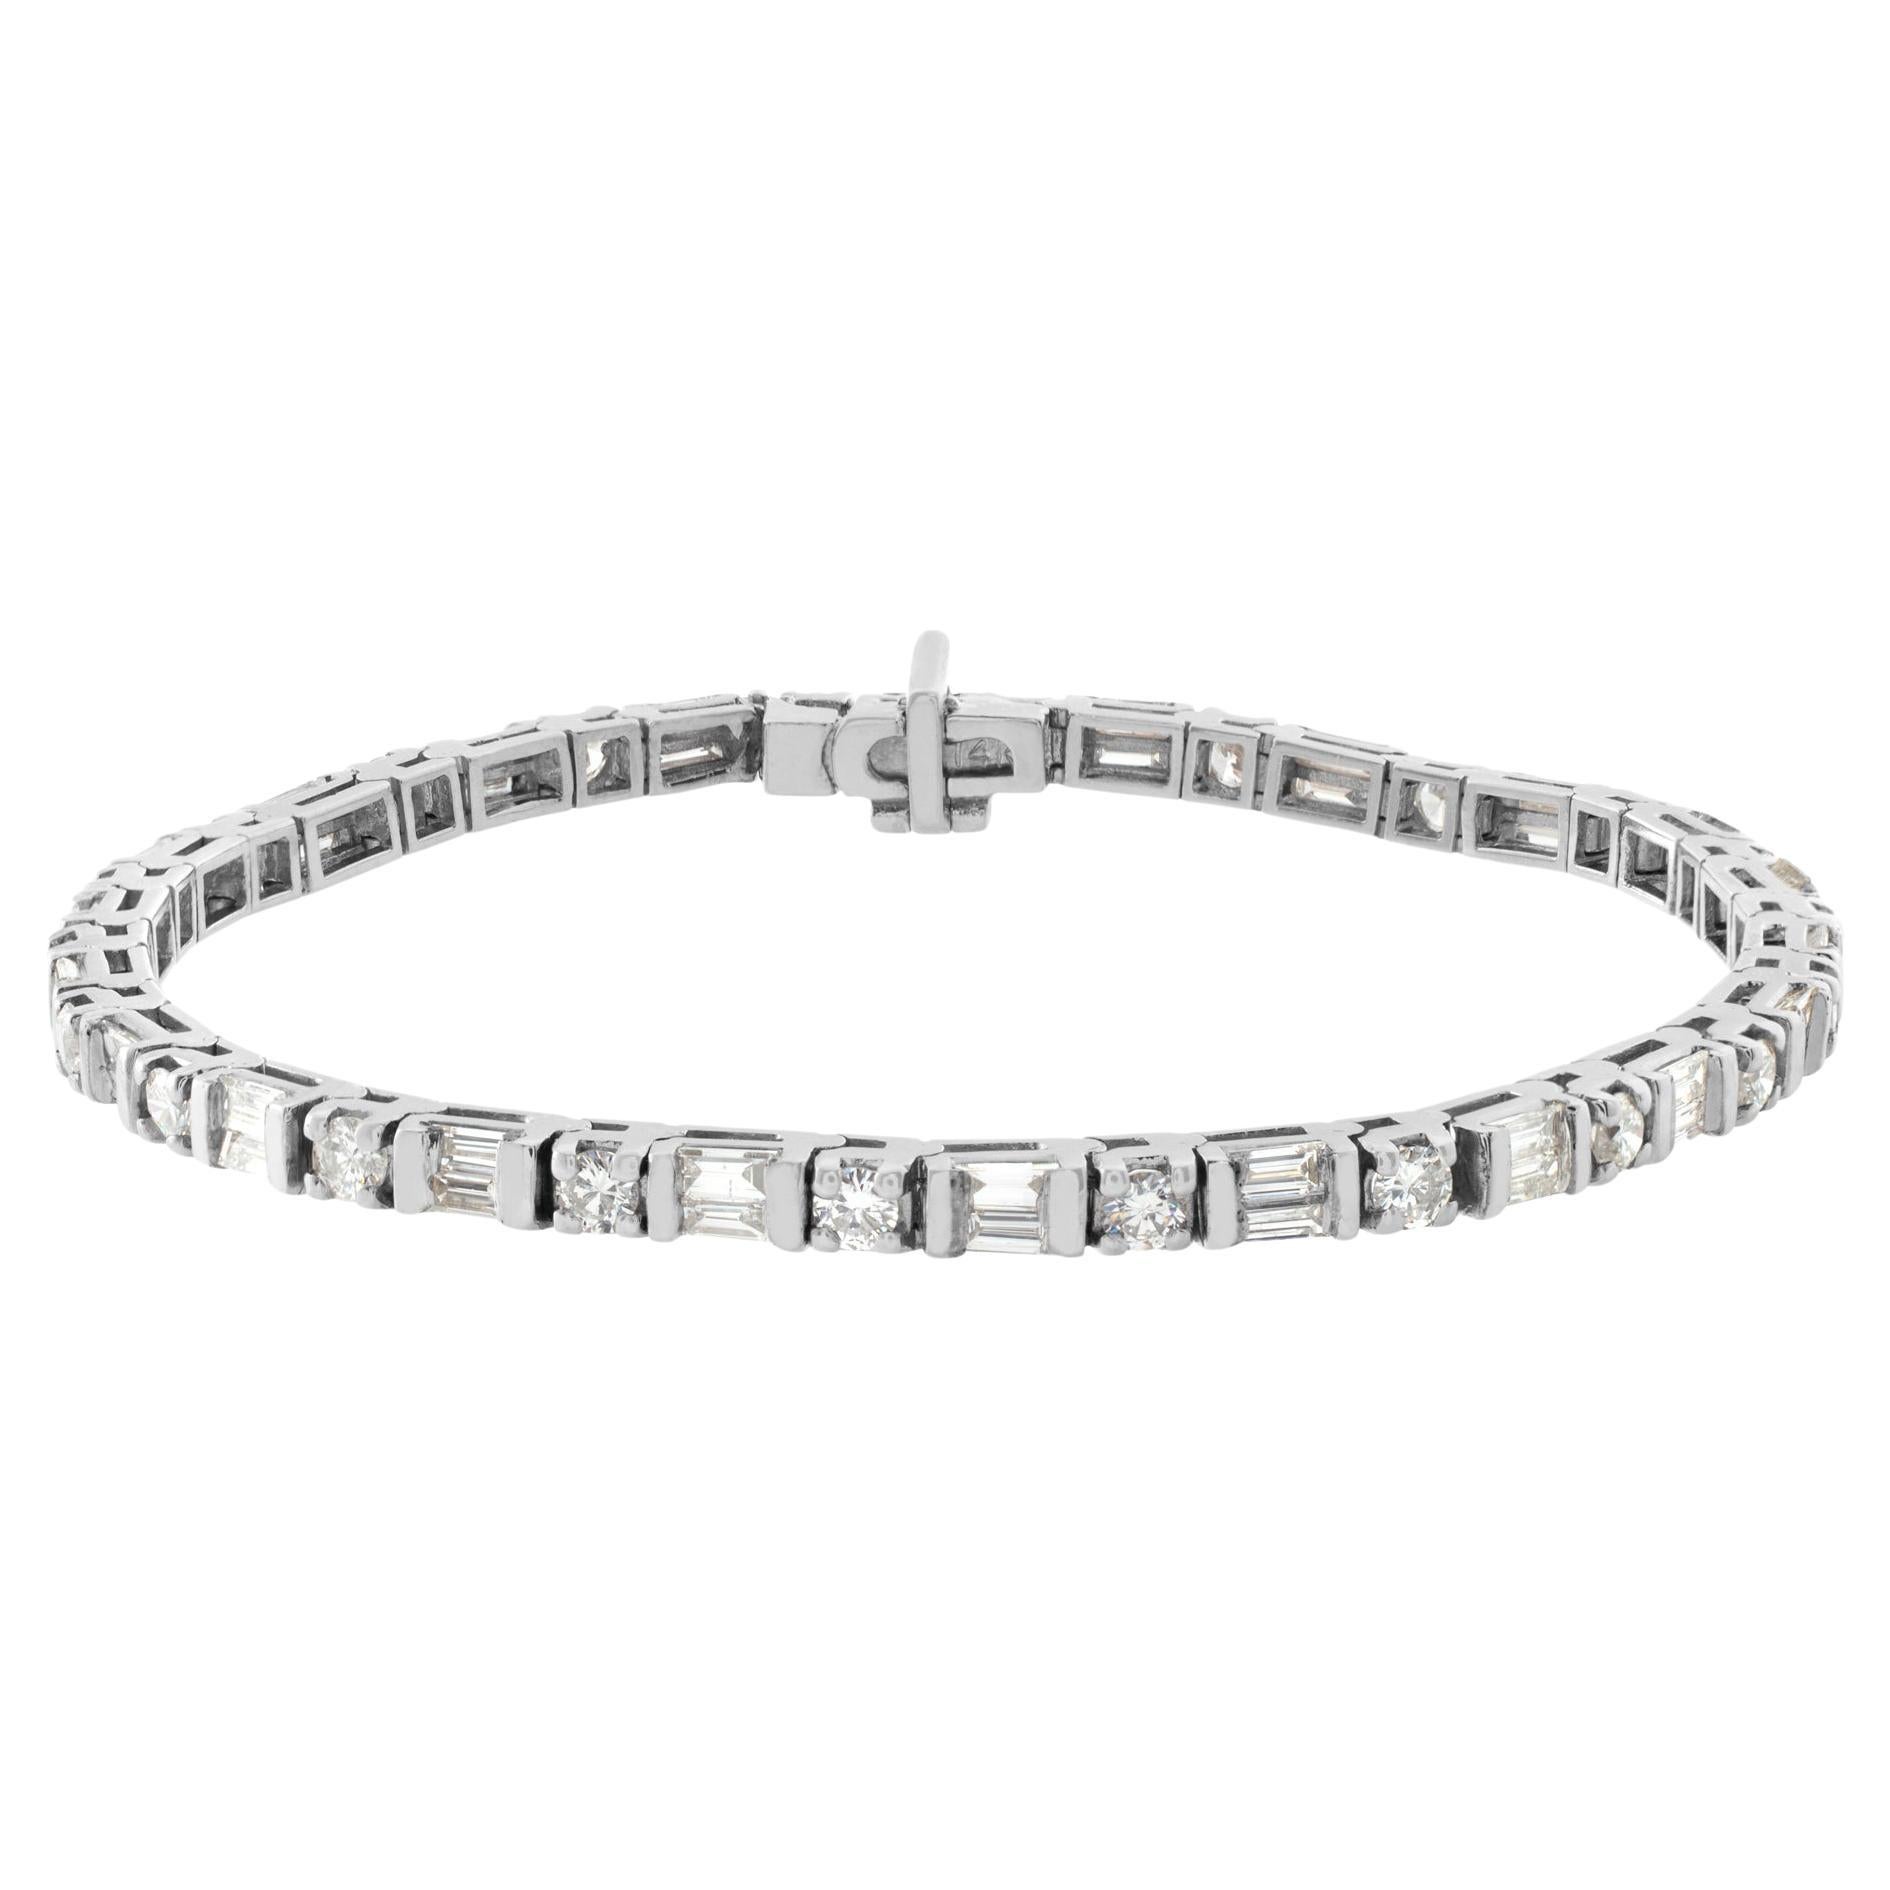 Diamond 14k White Gold Line Bracelet with 2 Carat Round & Baguette Cut Diamonds